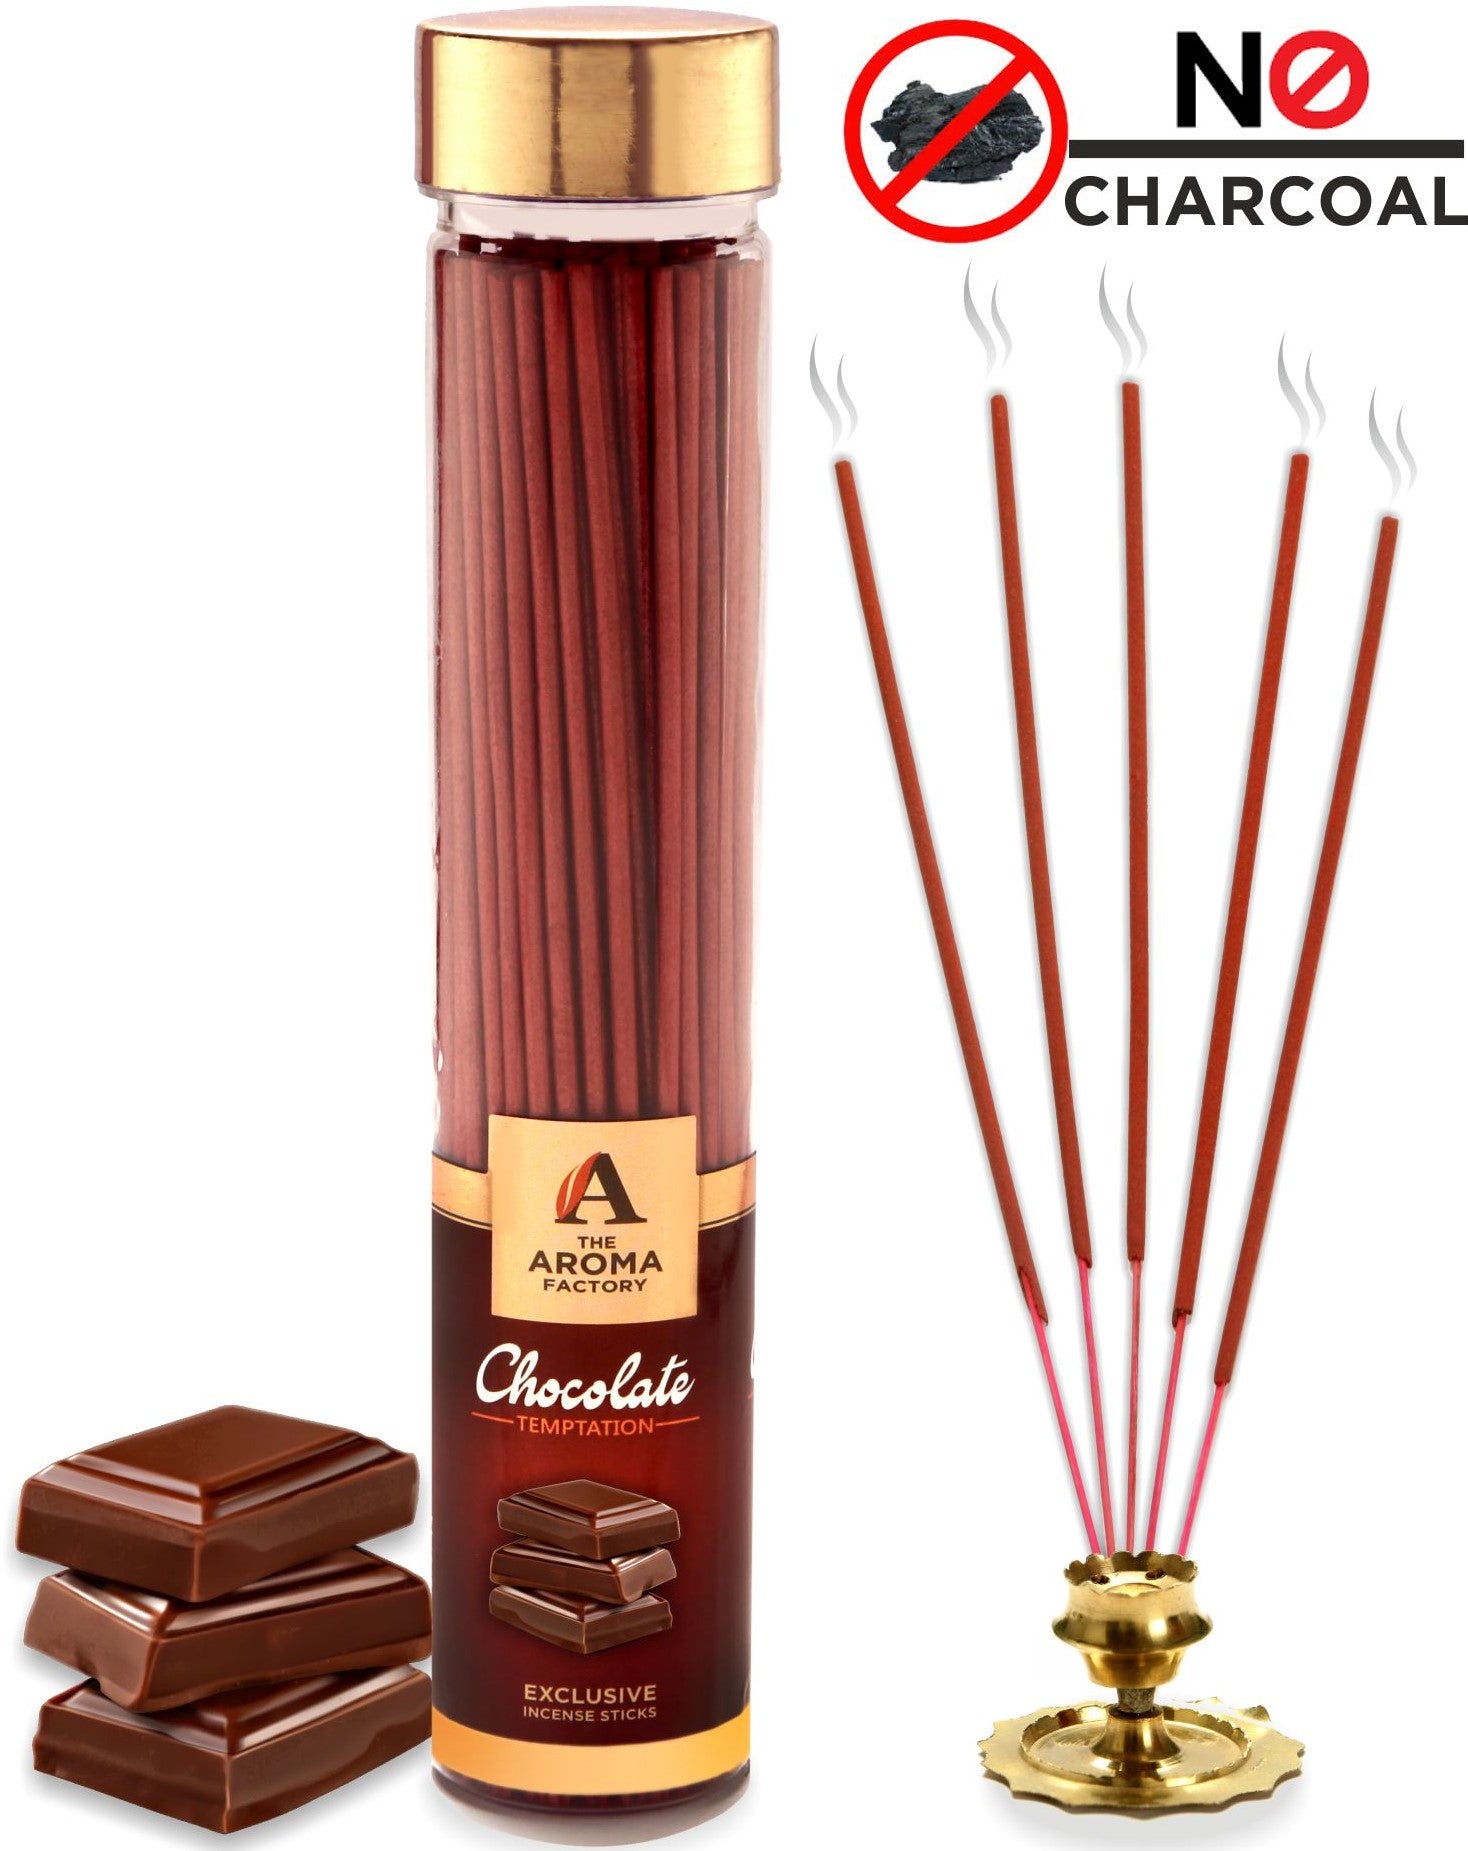 The Aroma Factory Chocolate Temptation Incense Sticks Agarbatti (Charcoal Free & 100% Herbal) 100g